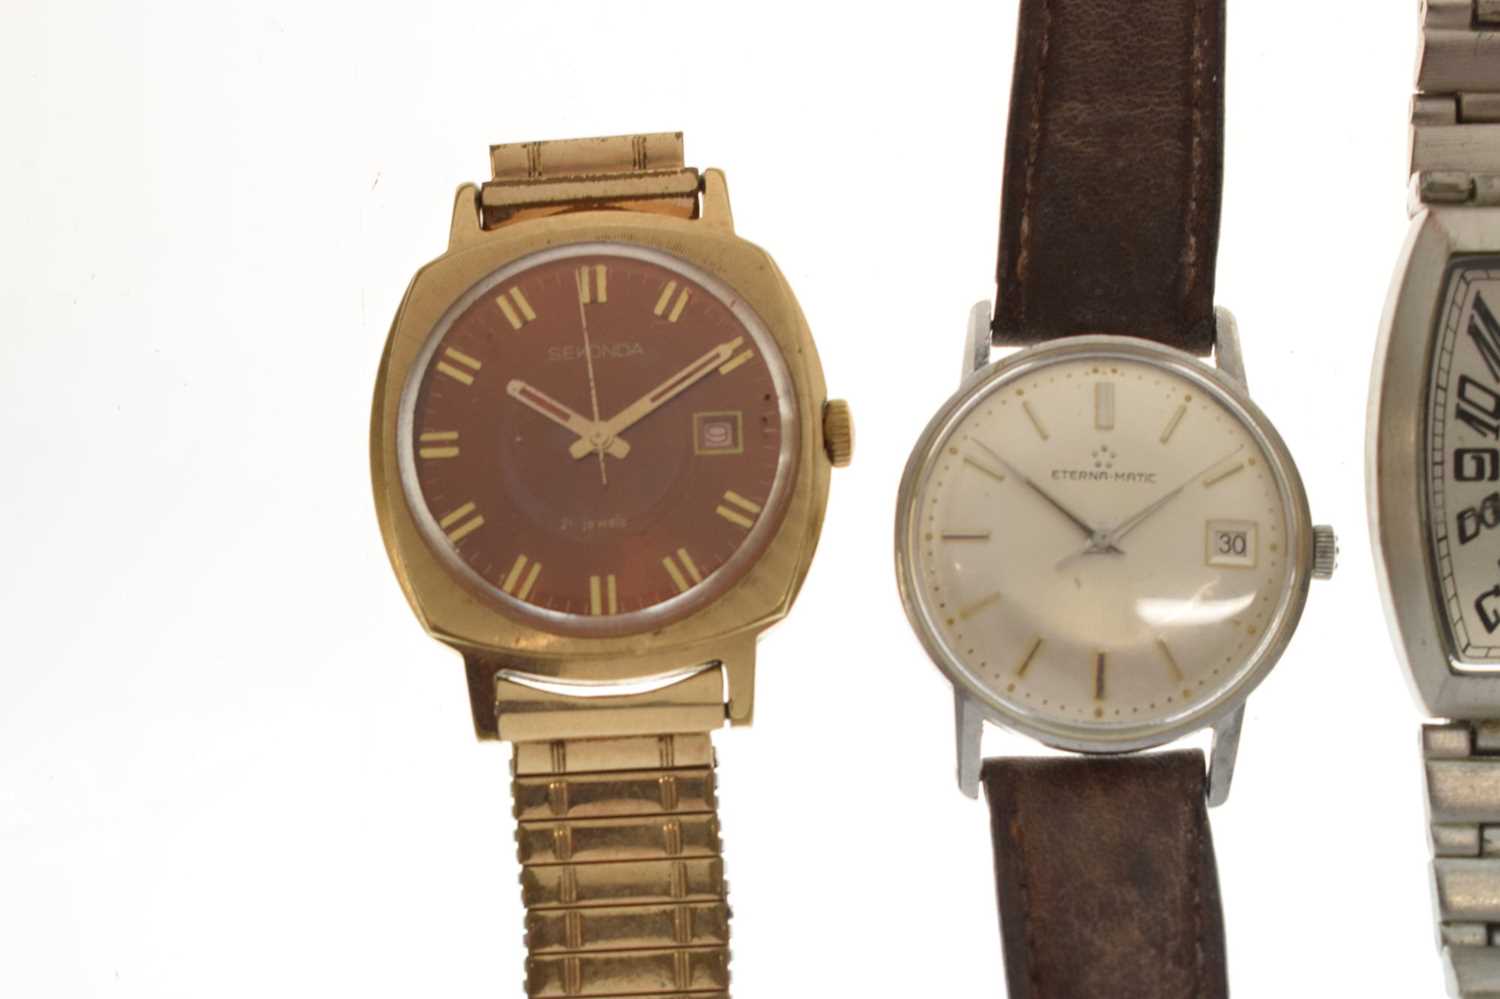 Eterna-Matic - Gentleman's stainless steel cased wristwatch - Image 2 of 11